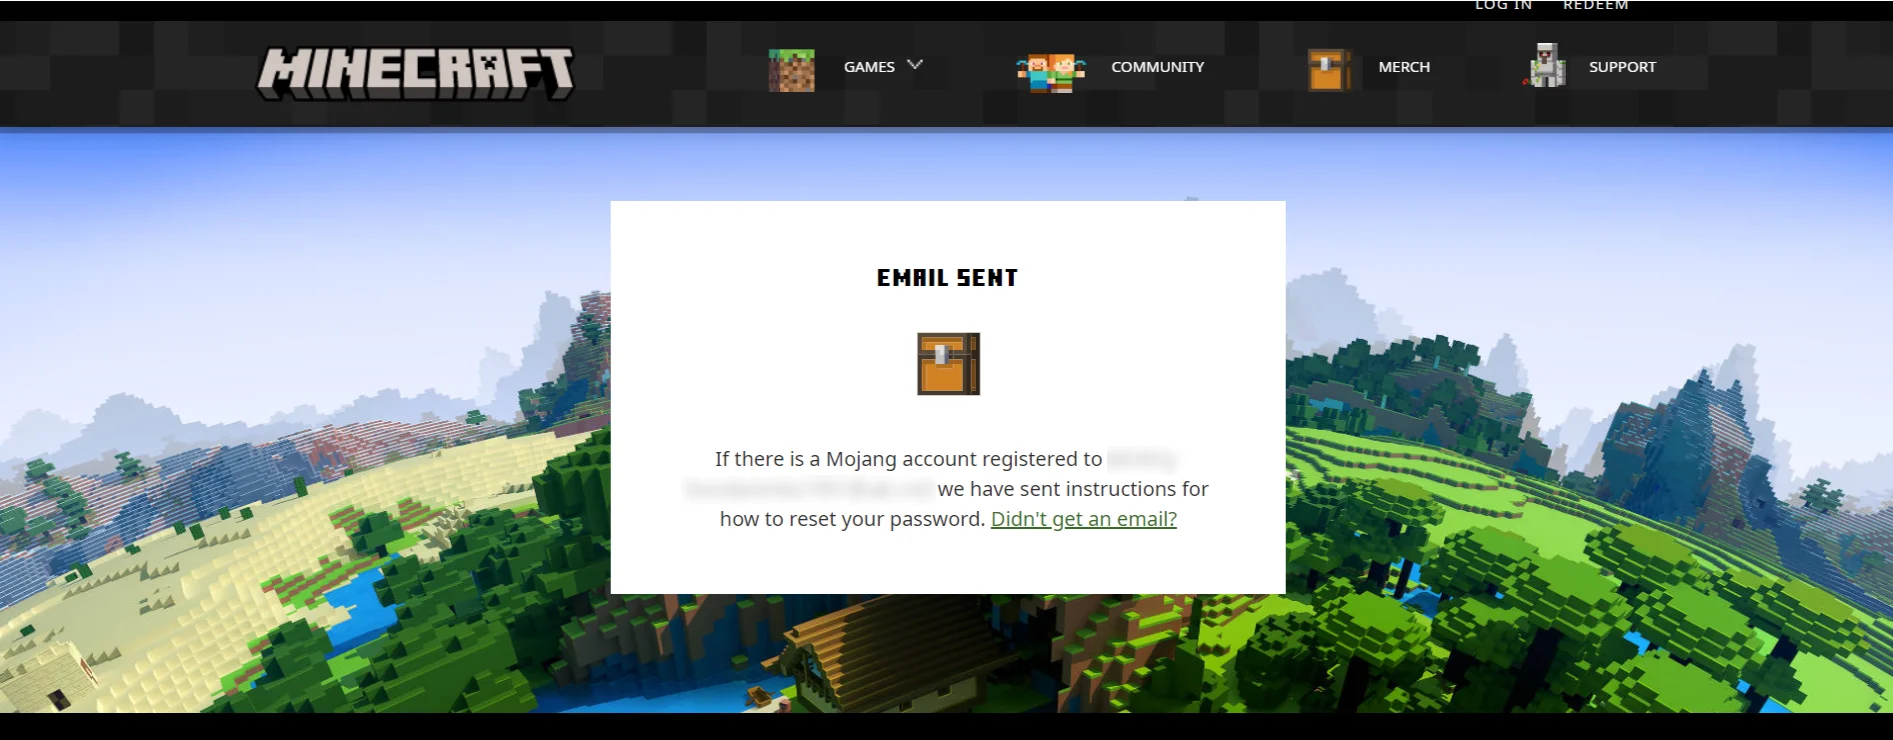 How to Change Minecraft Password